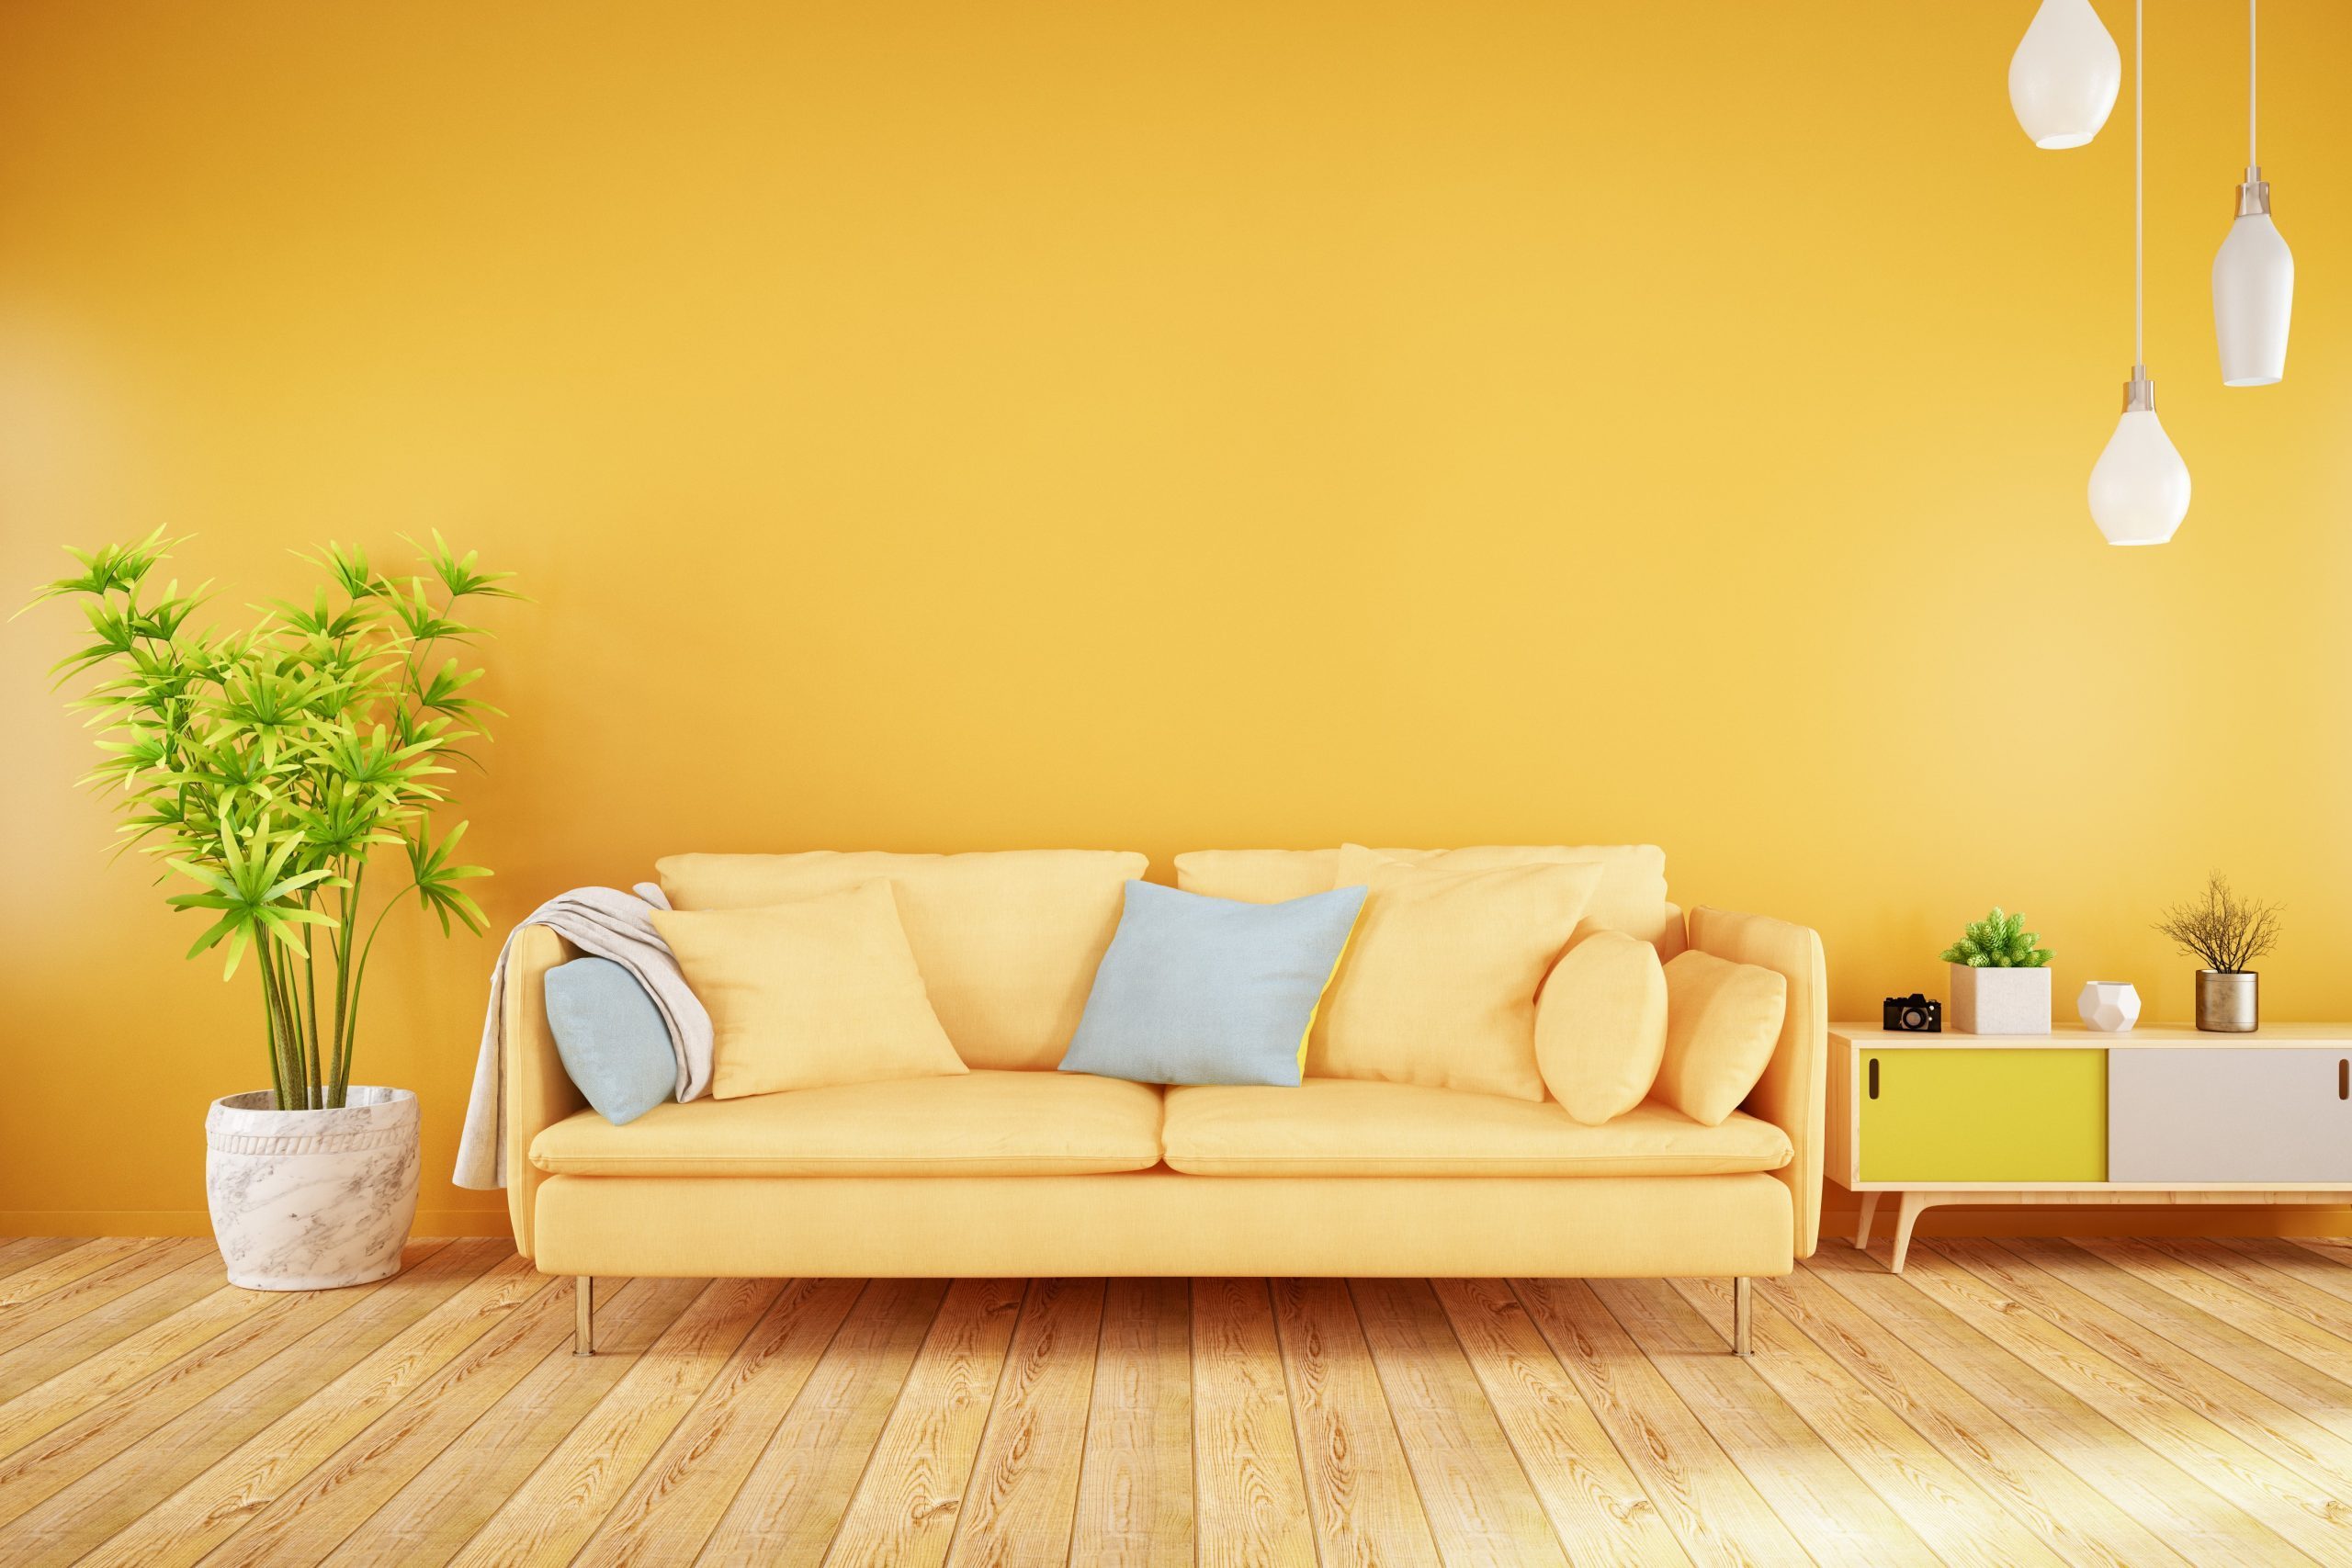 Purple And Yellow Living Room Ideas Pinterest